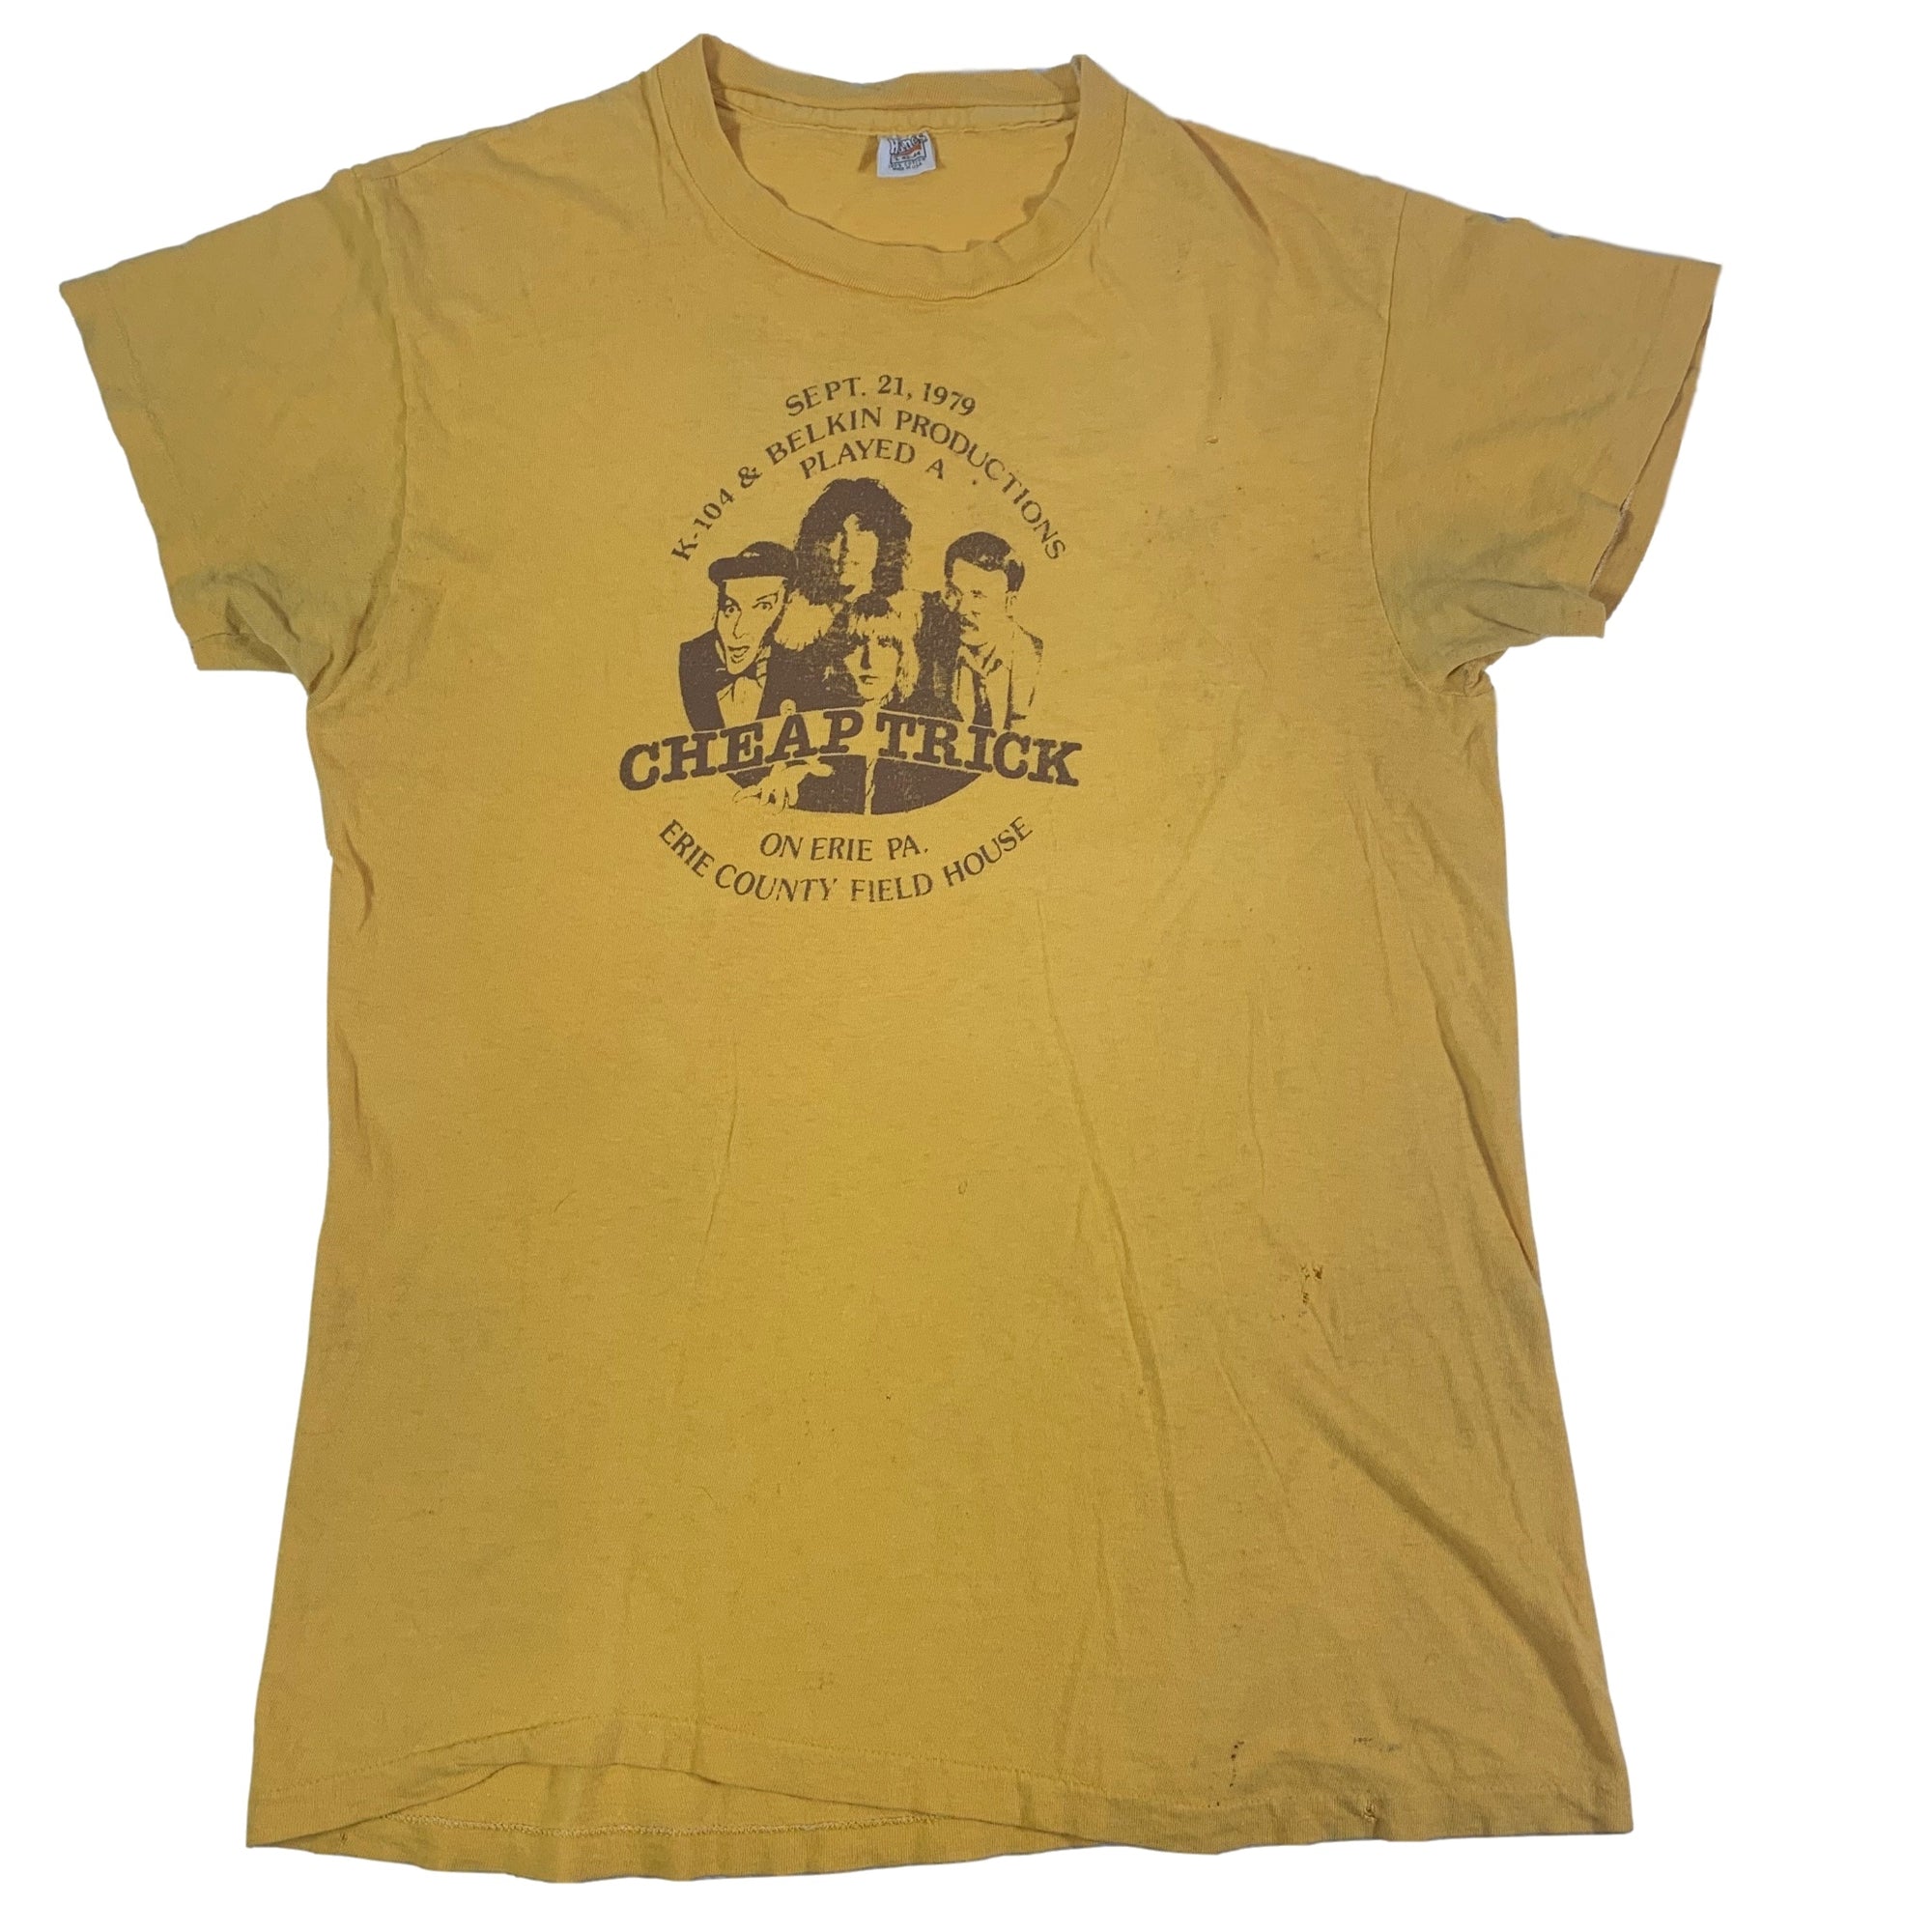 Vintage Cheap Trick "1979" T-Shirt - jointcustodydc